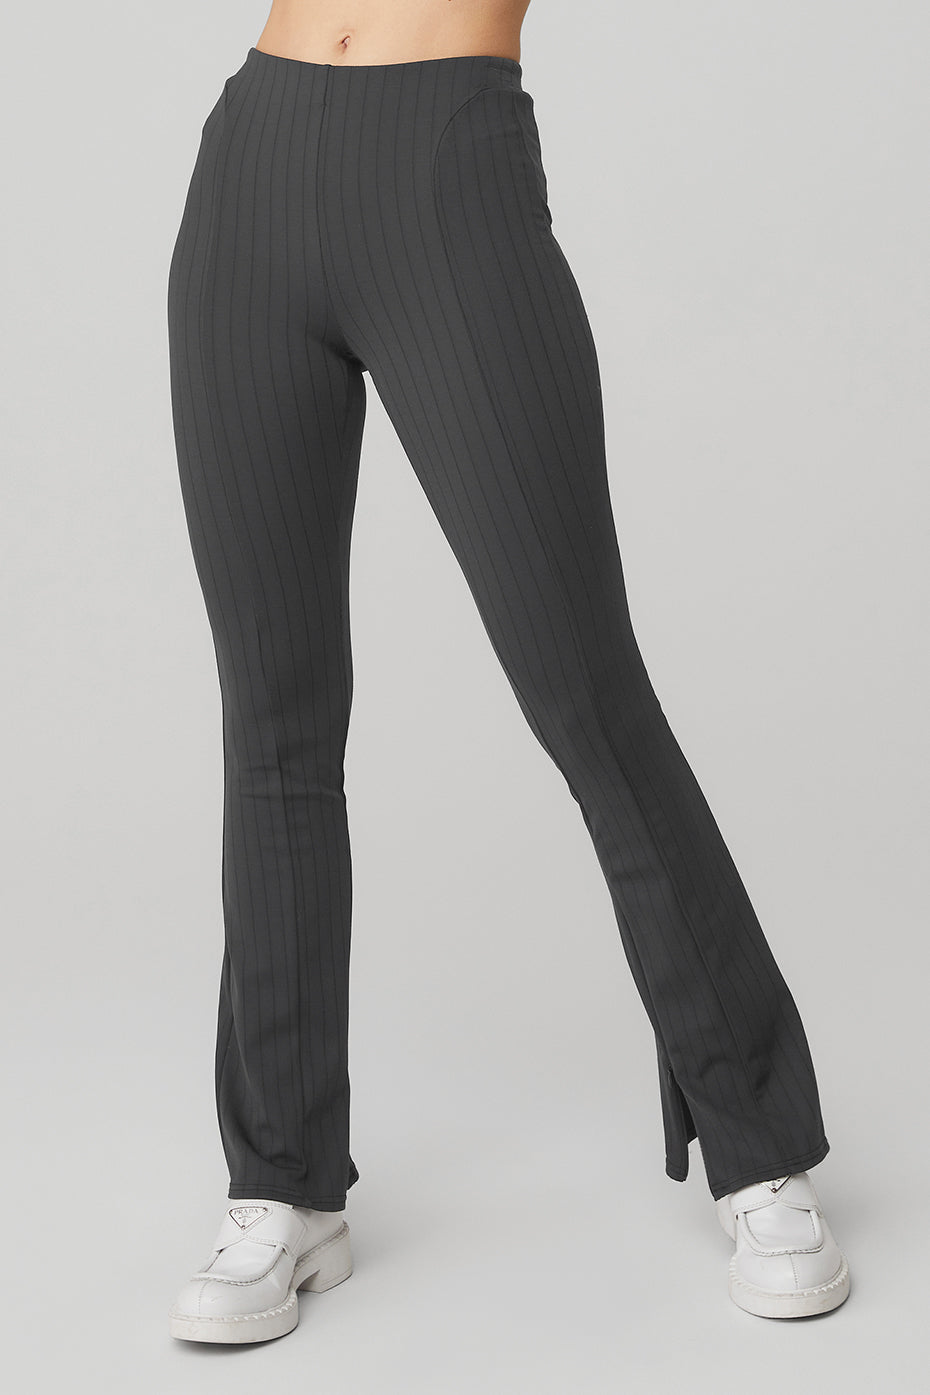 Skinny-Leg, High-Waist Dress Pant Yoga Pants (Aegean Pinstripe)